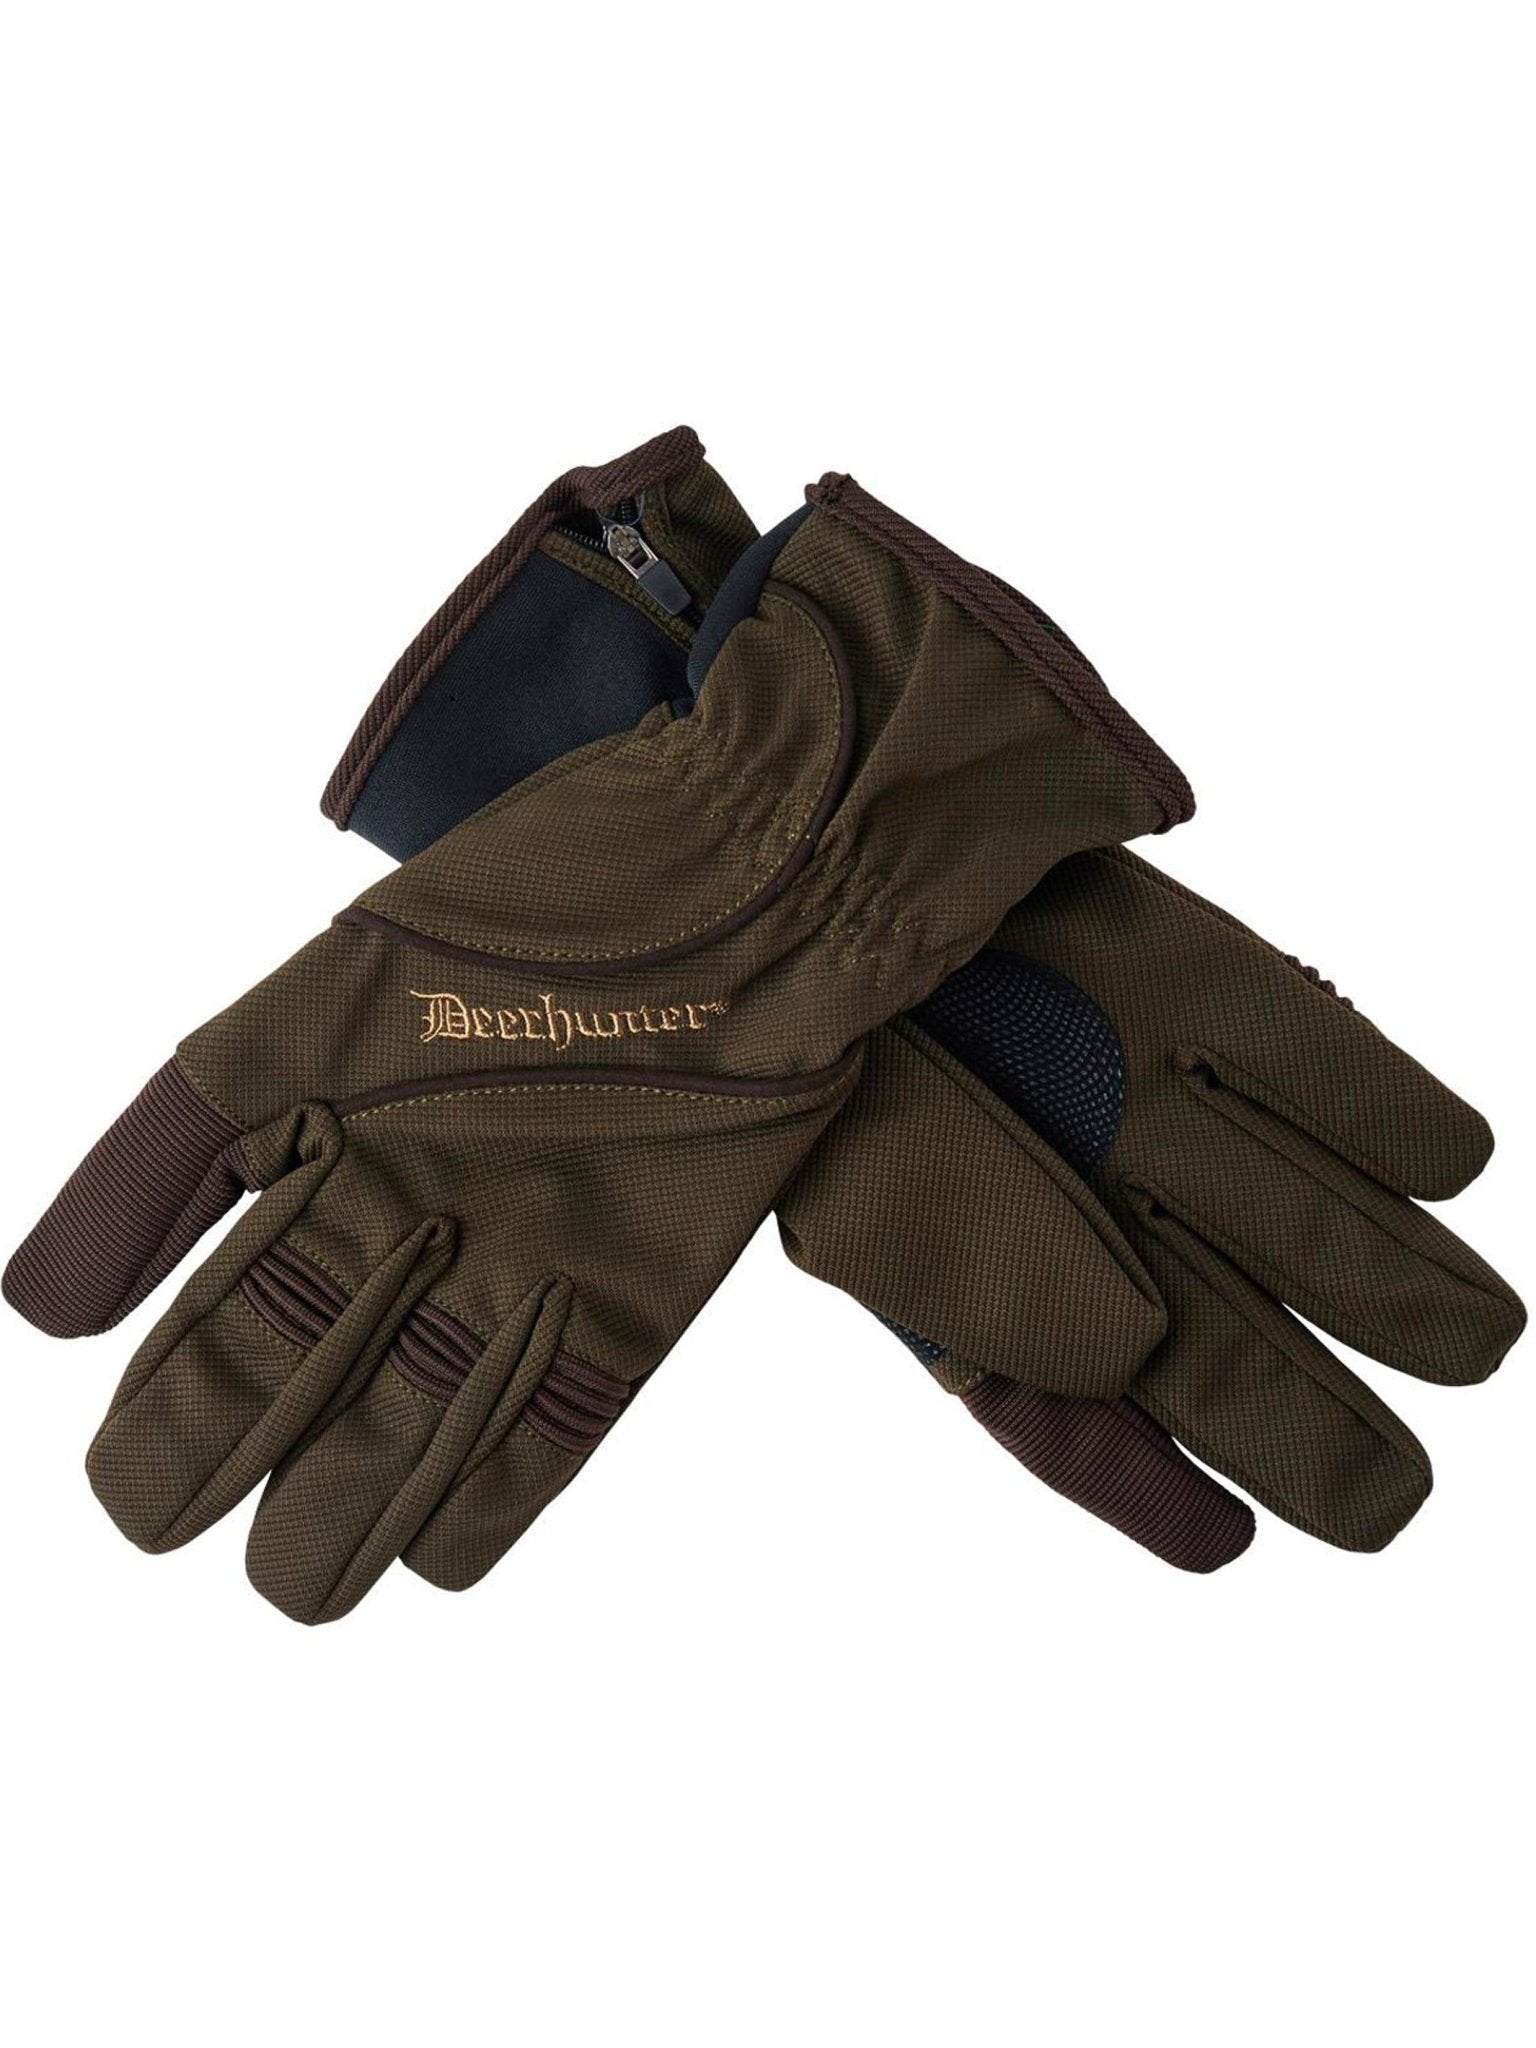 4elementsclothingDeerhunterDeerhunter - Muflon Light GlovesGloves8630-376-M